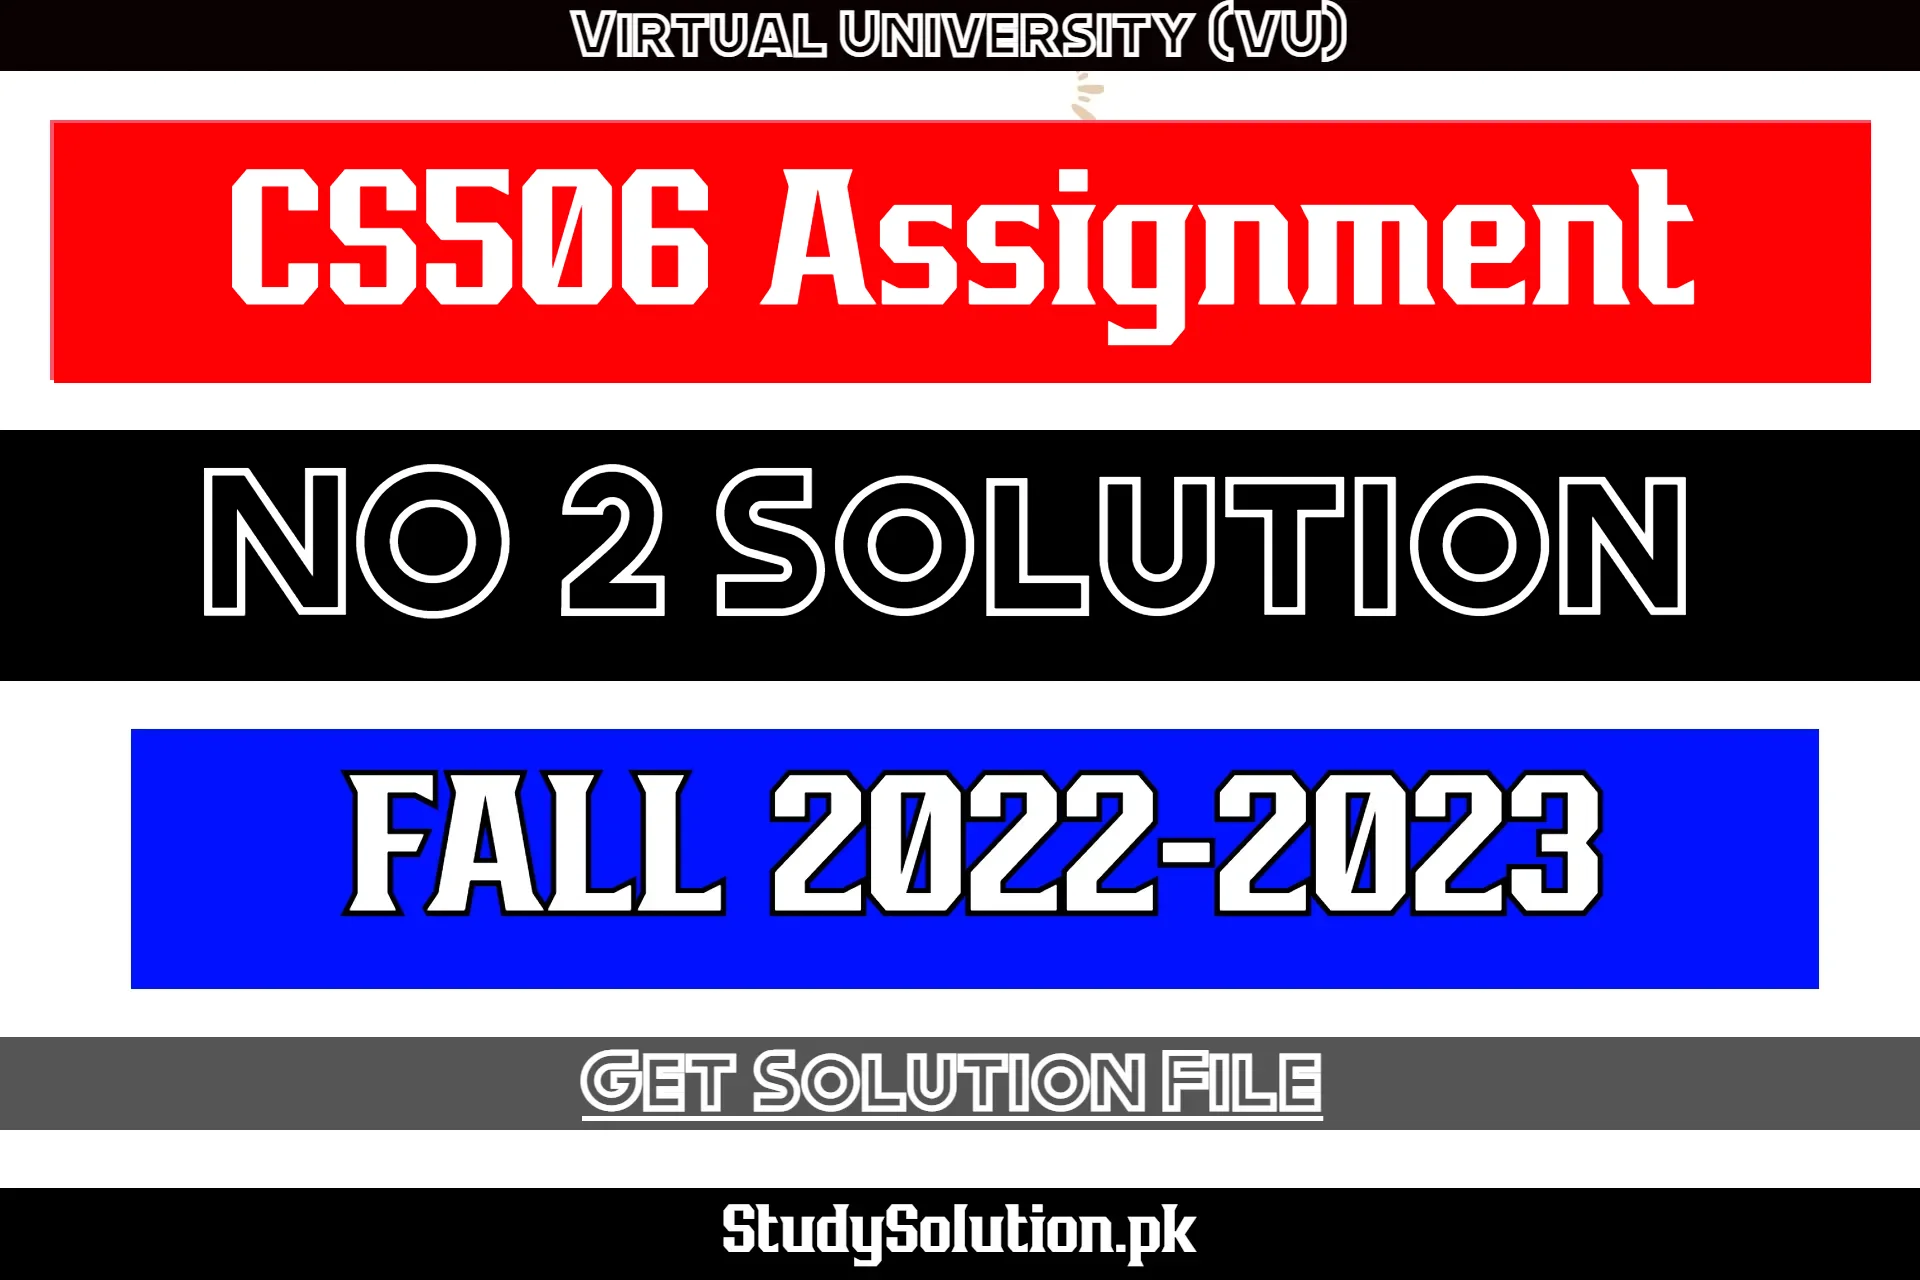 CS506 Assignment No 2 Solution Fall 2022